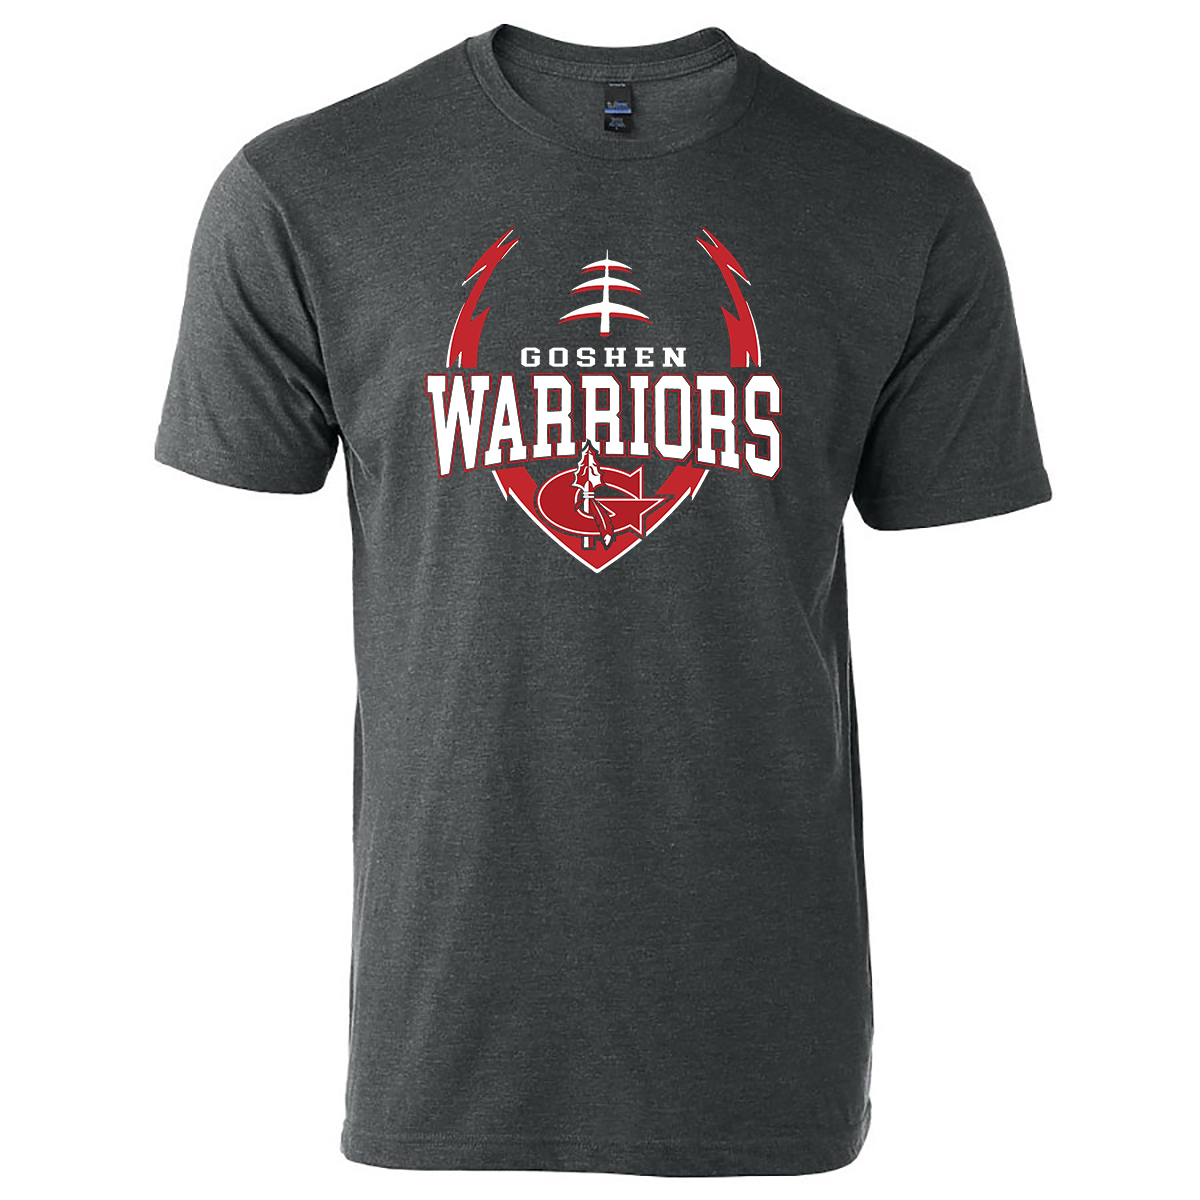 warrior football logo